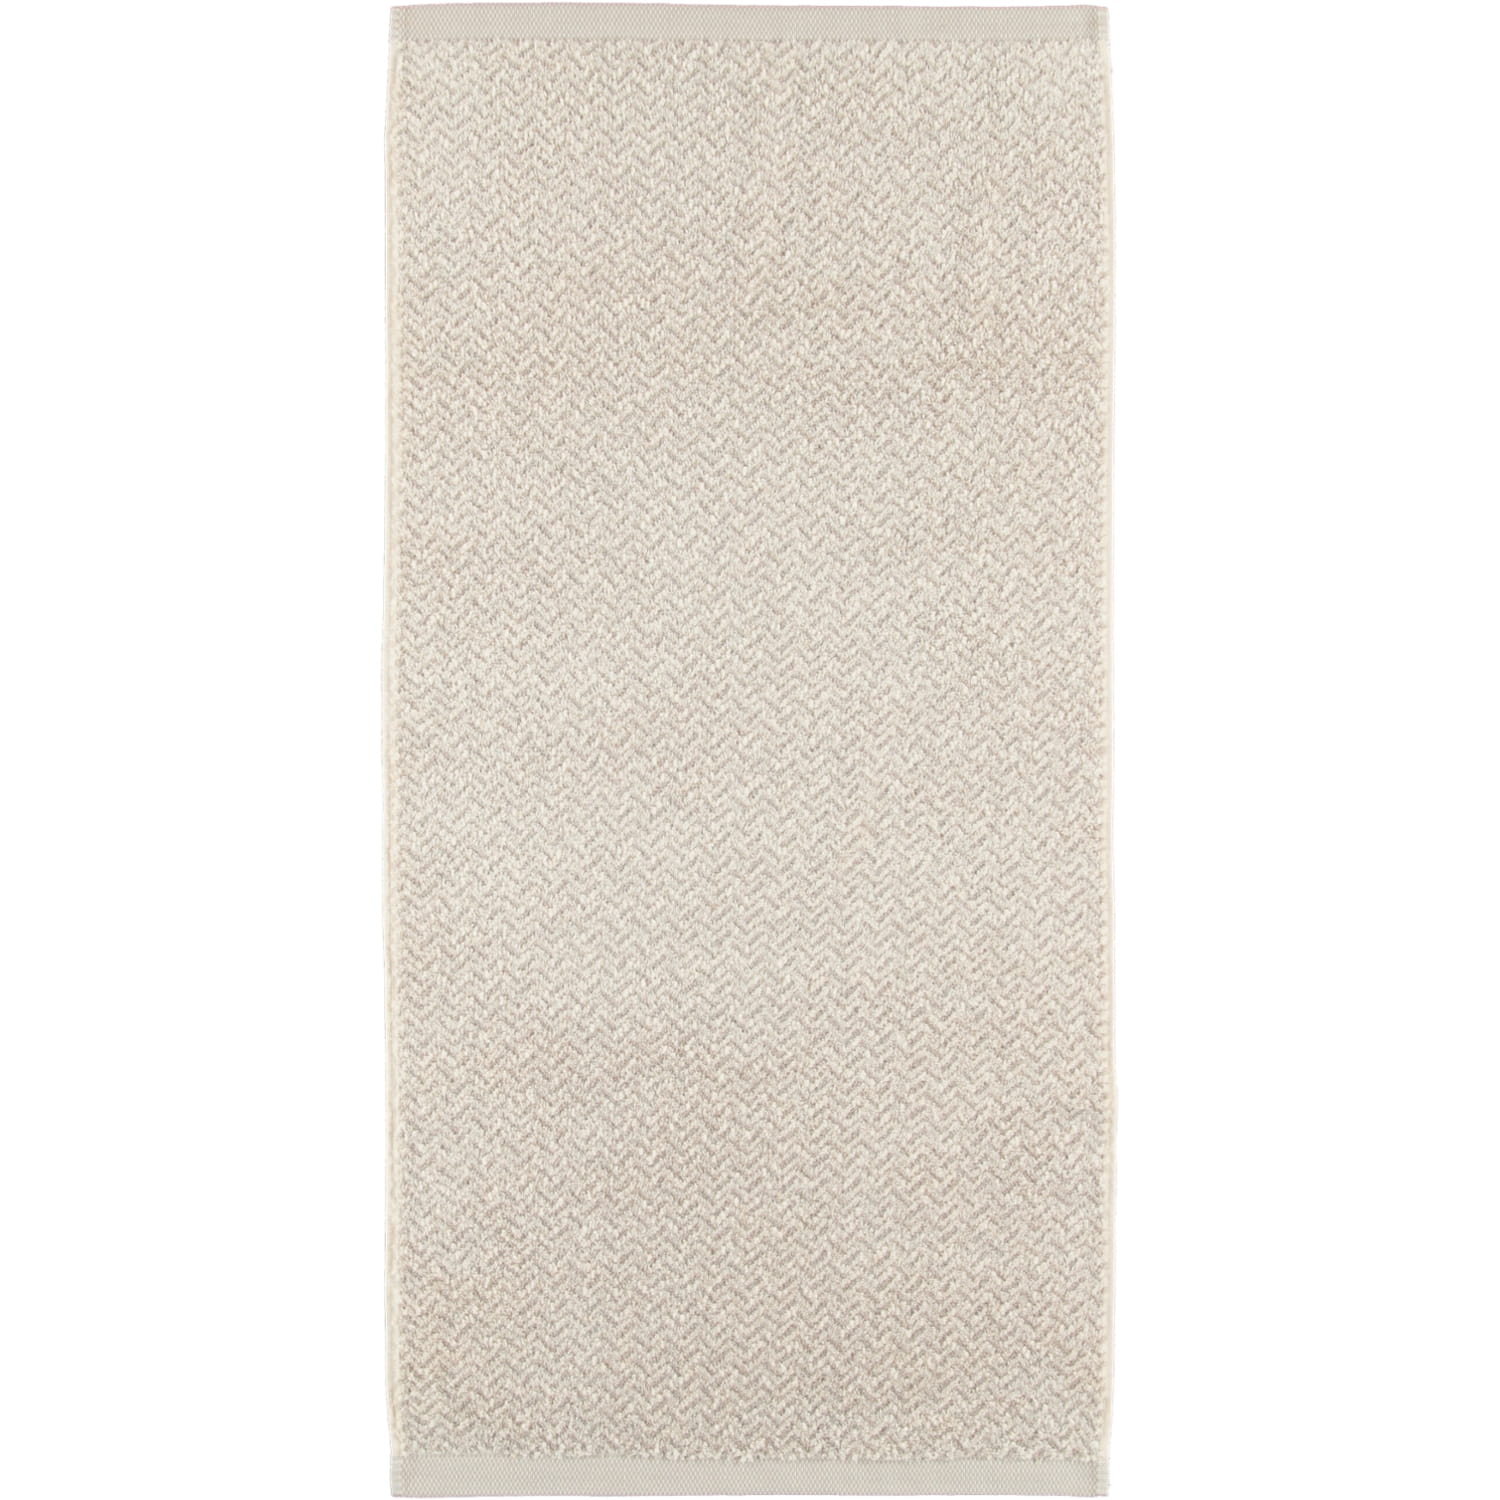 | (1-0567/8970) - Handtuch Handtücher Brooklyn - 50x100 - 071 Möve Handtuch - cm Fischgrat Farbe: nature/cashmere |